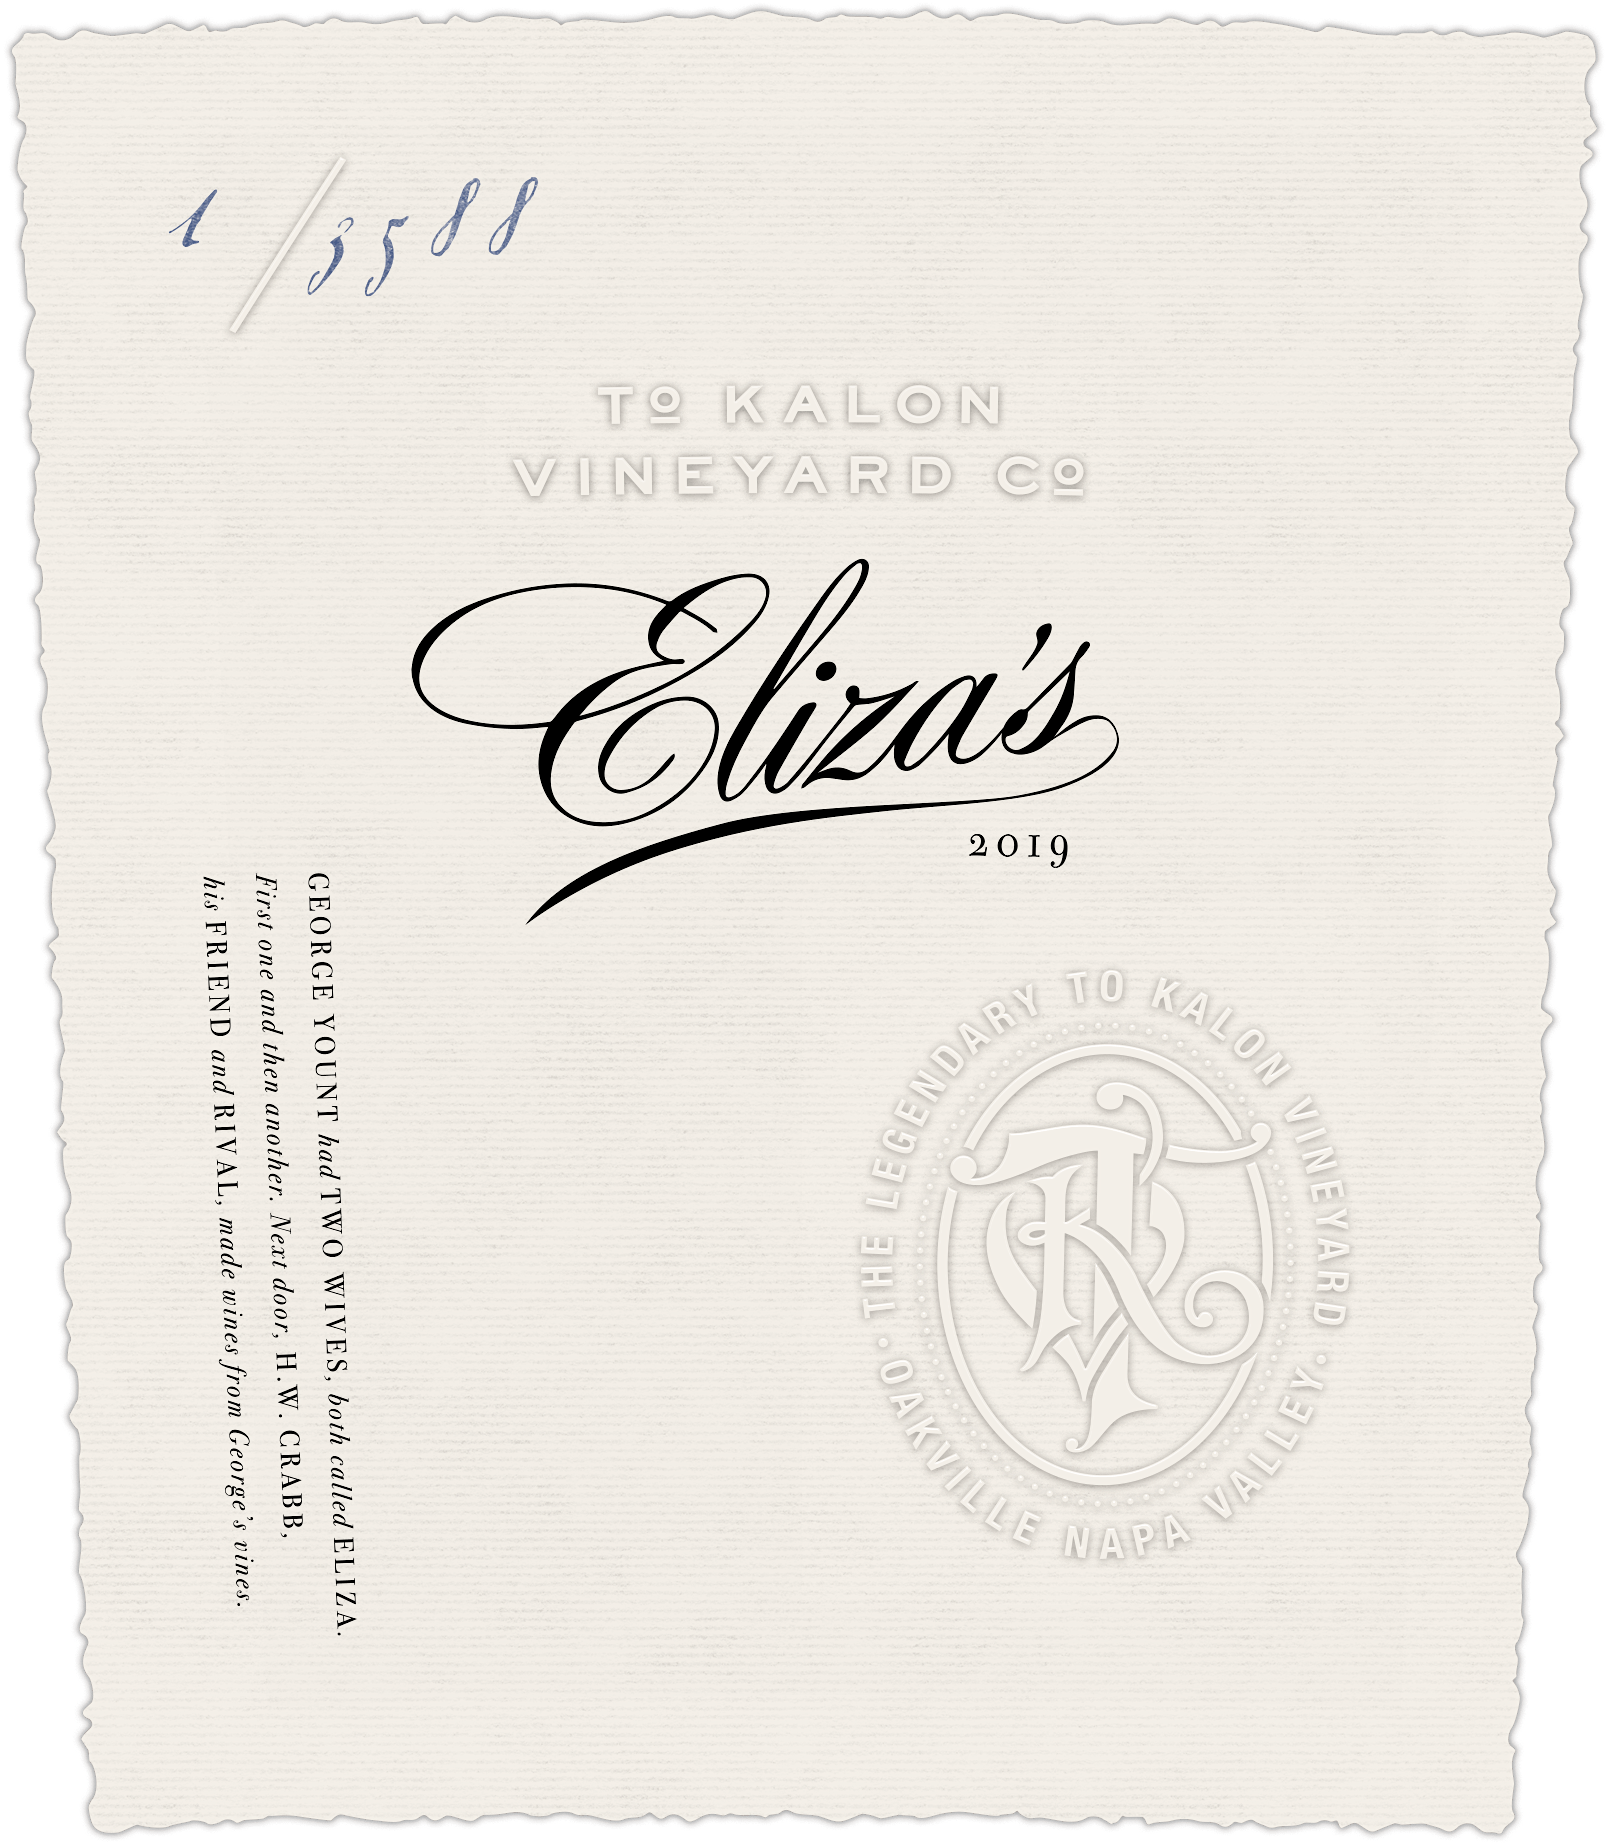 Label for To Kalon Vineyard Company